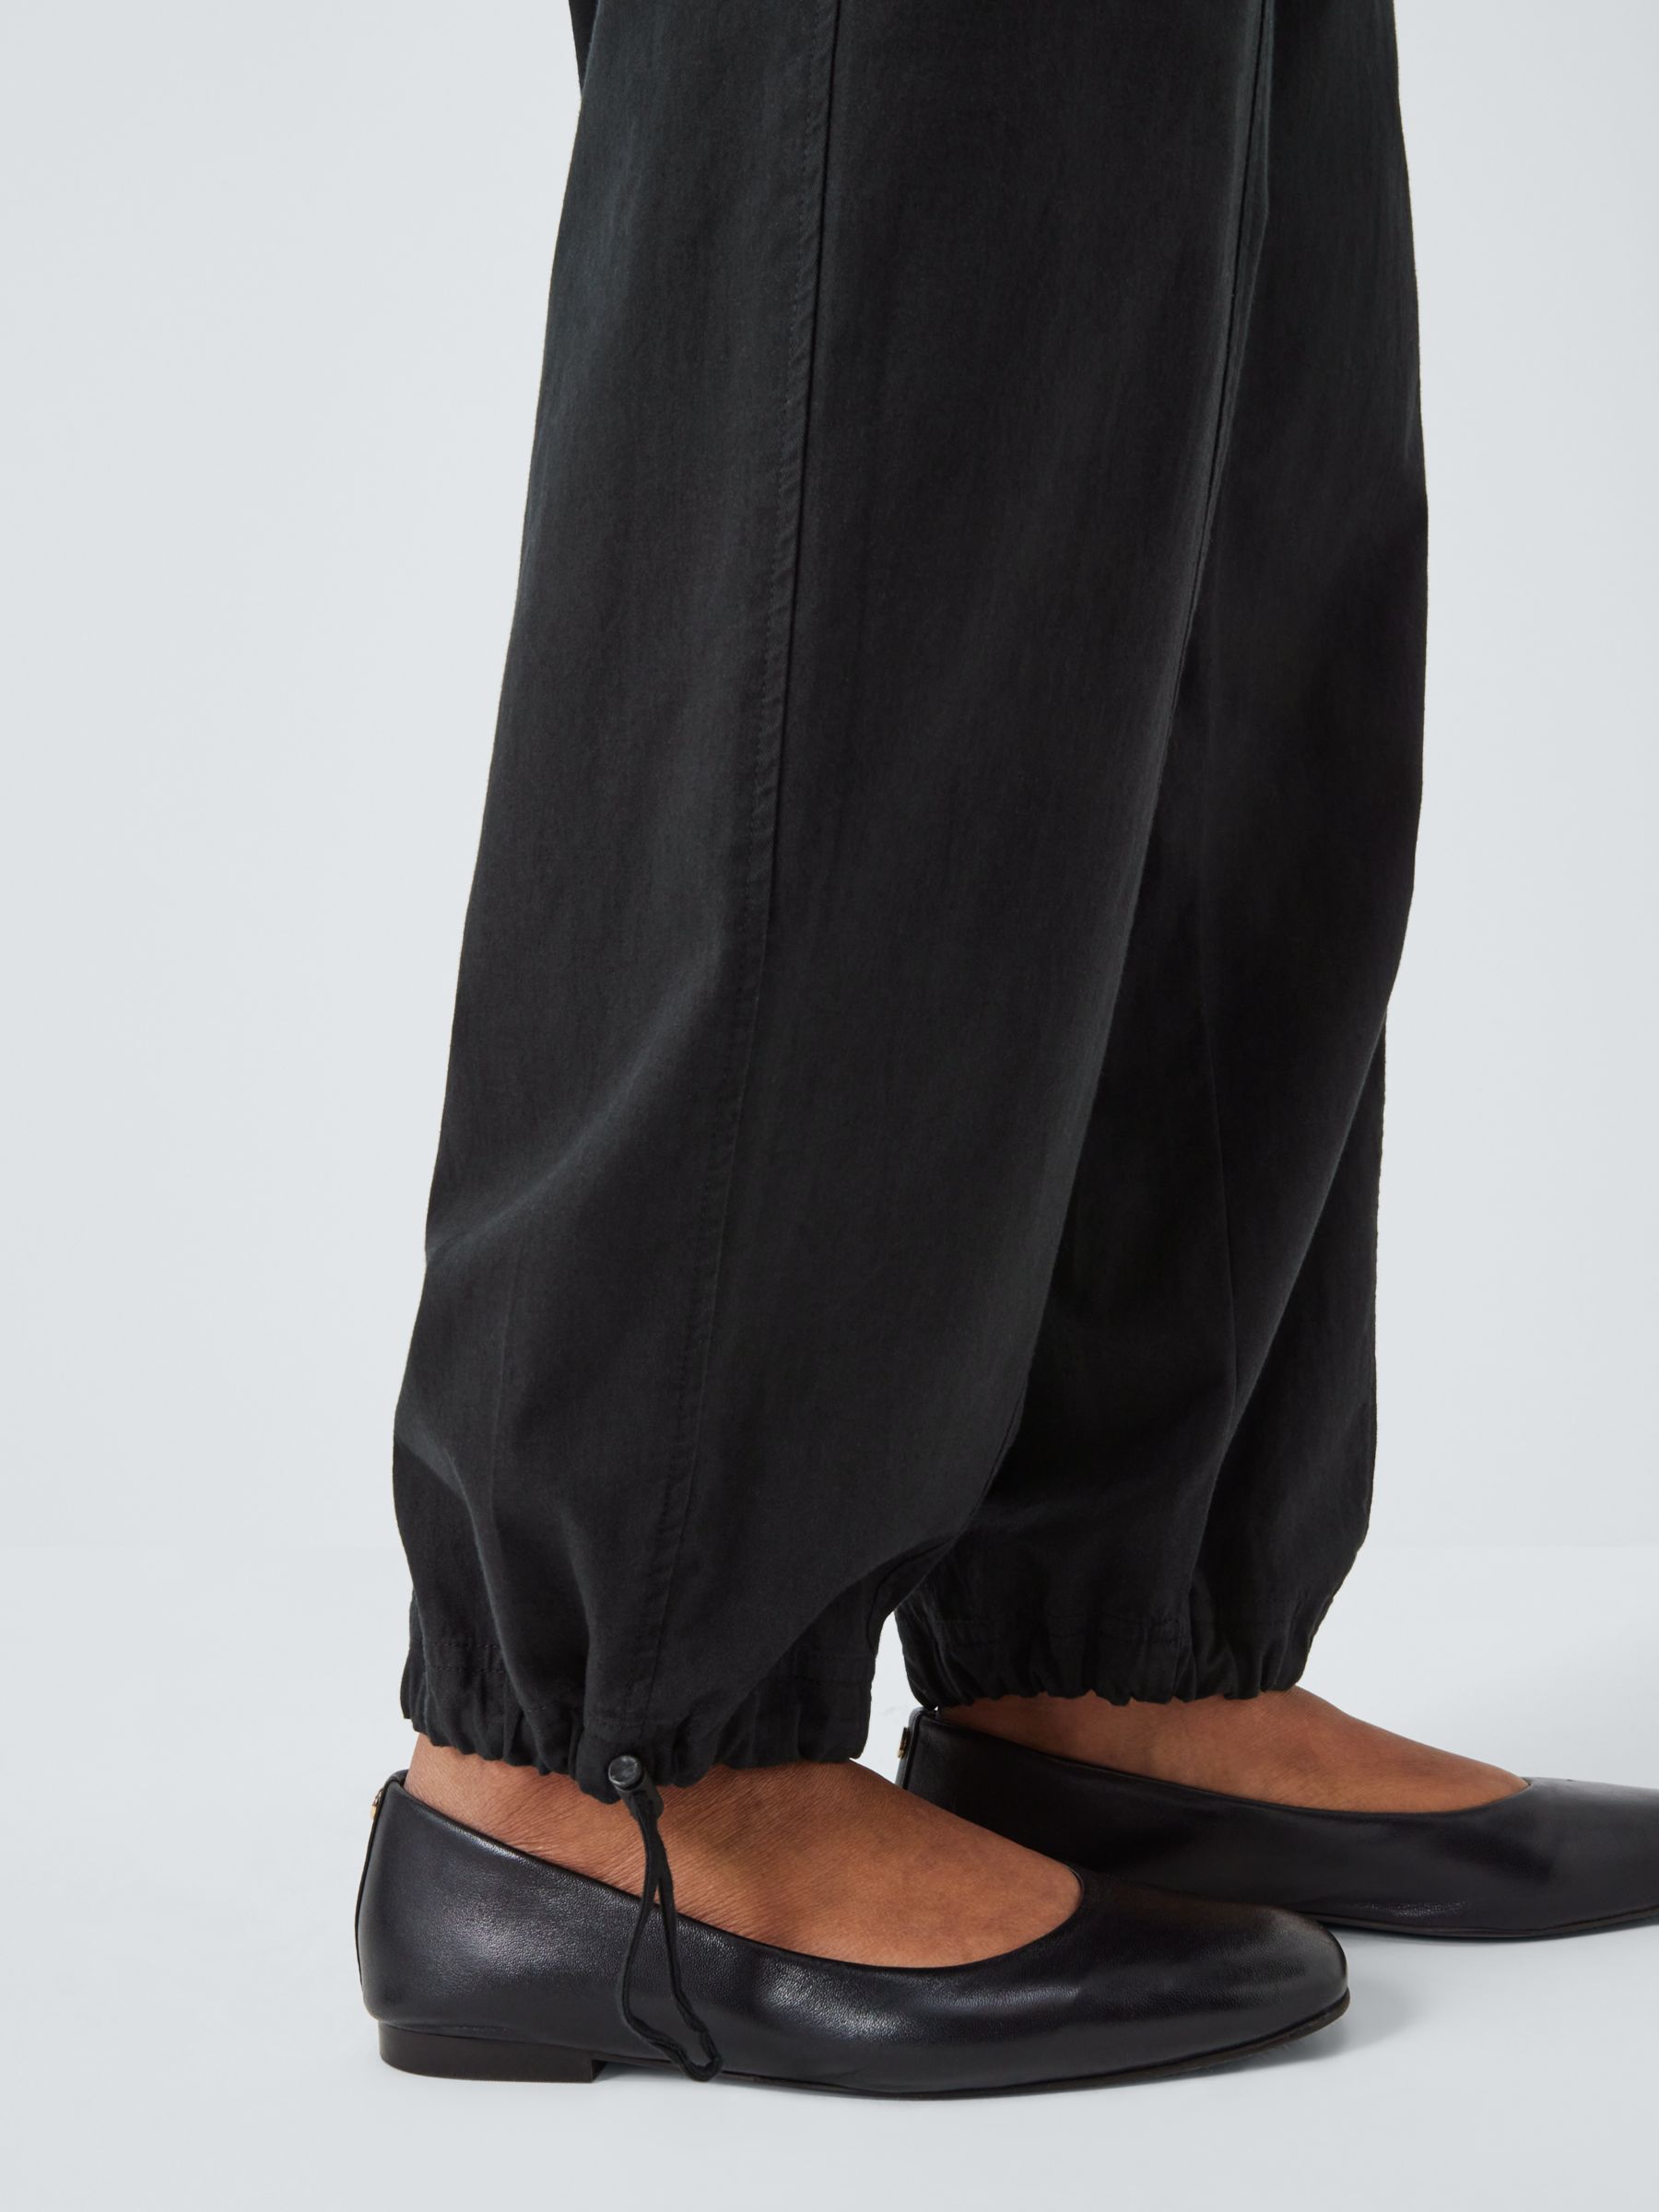 John Lewis ANYDAY Tie Utility Trousers, Black, 6